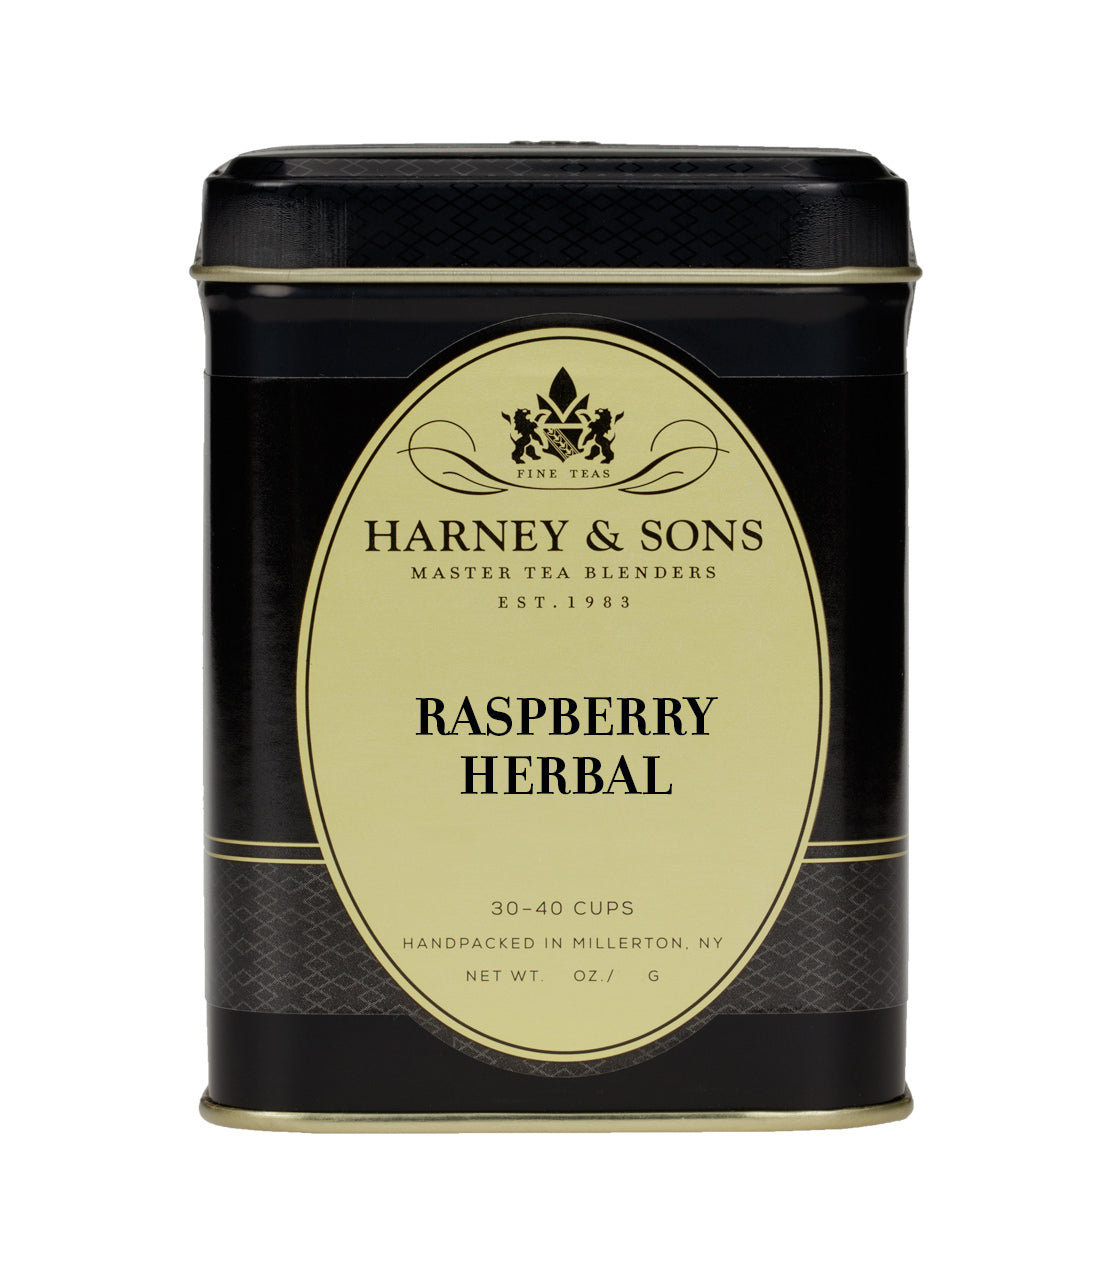 Raspberry Herbal - Loose 4 oz. Tin - Harney & Sons Fine Teas